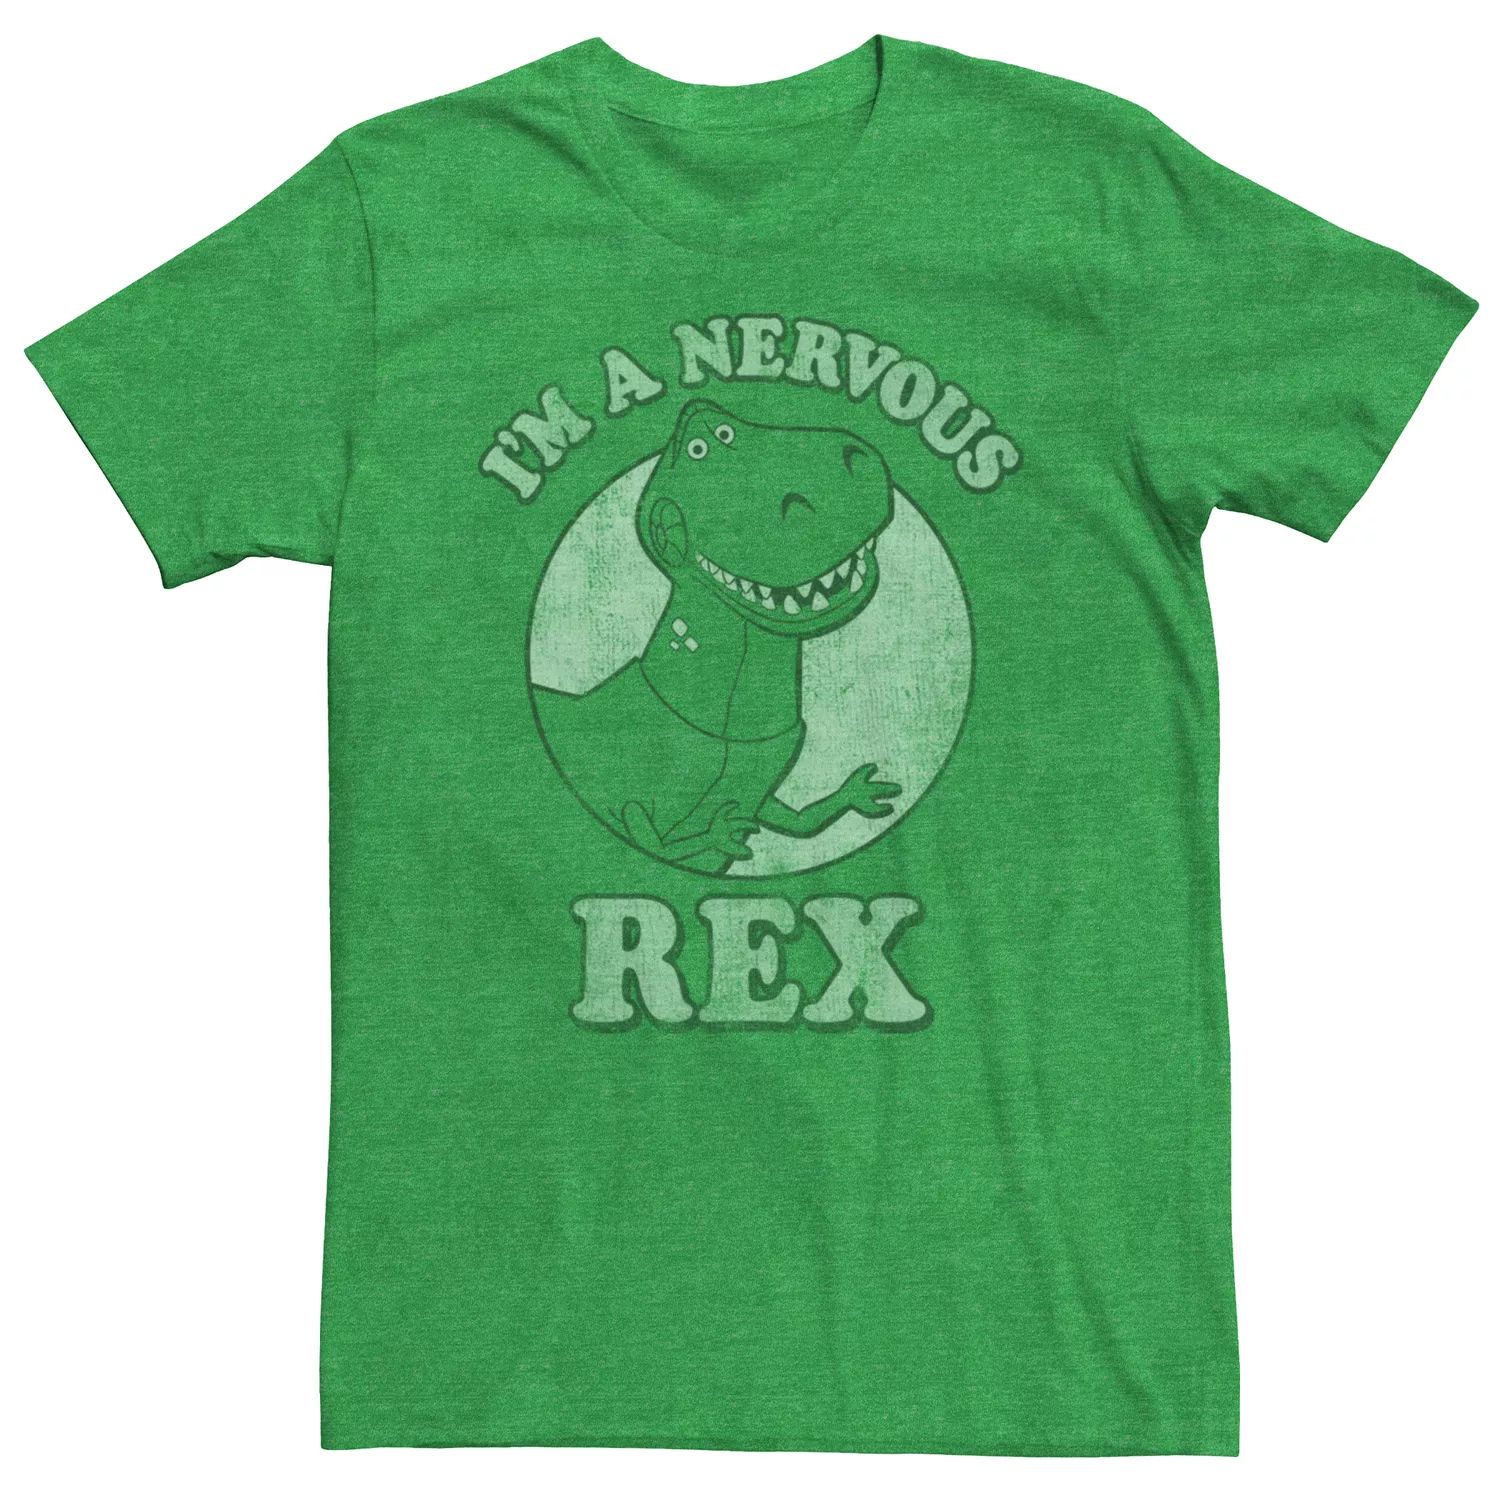 мужская футболка disney pixar toy story rex face licensed character Мужская футболка Disney/Pixar Toy Story Rex Nervous Tee Licensed Character